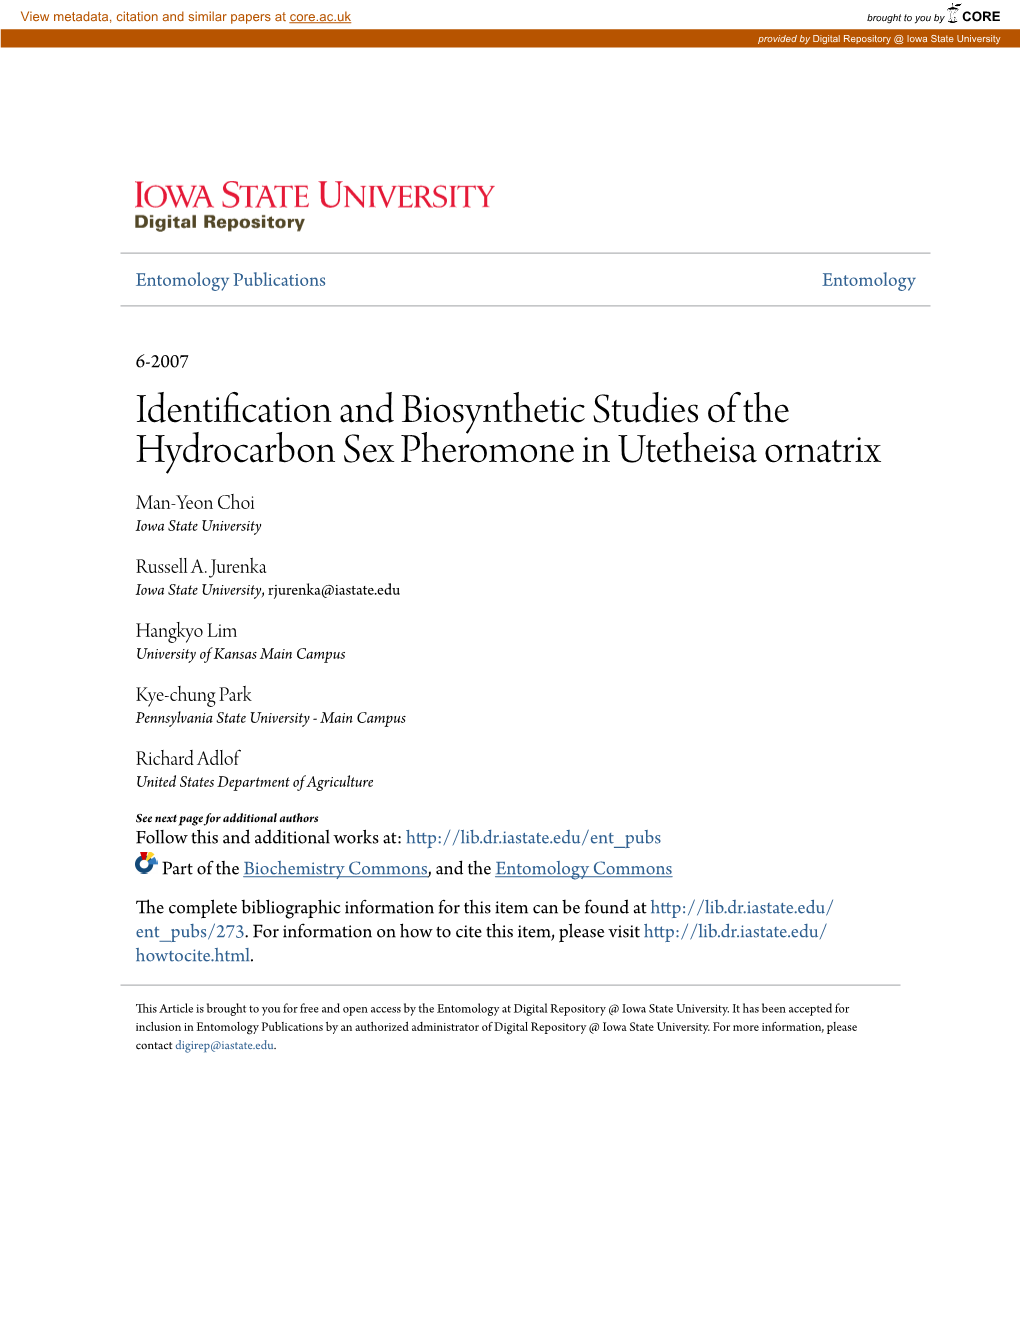 Identification and Biosynthetic Studies of the Hydrocarbon Sex Pheromone in Utetheisa Ornatrix Man-Yeon Choi Iowa State University